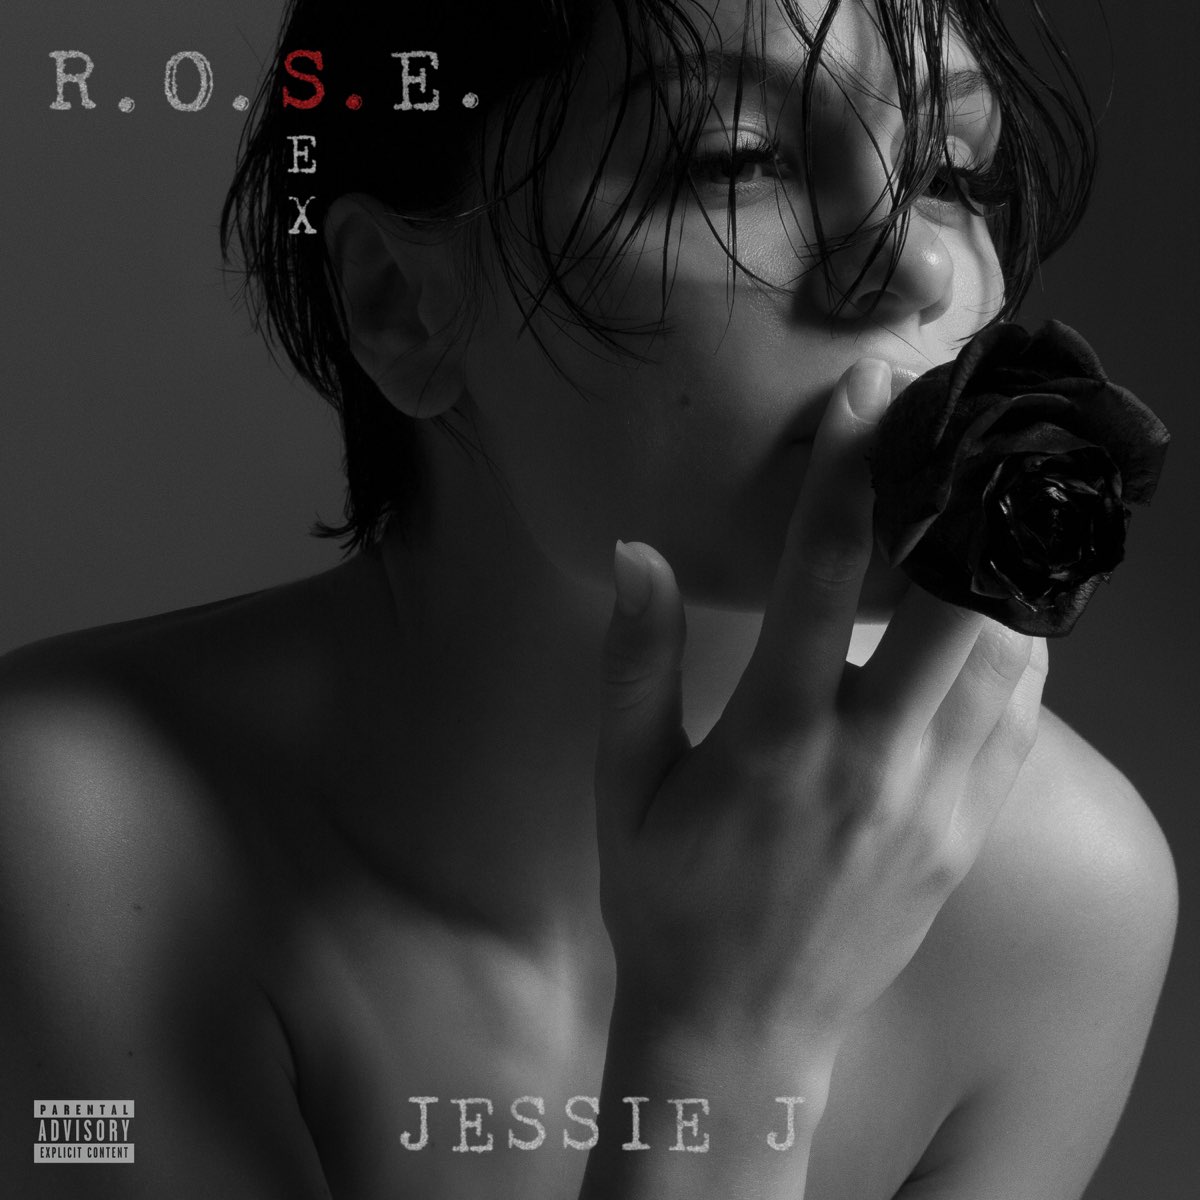 Camille Trinidad Sex - R.O.S.E. (Sex) - EP by Jessie J on Apple Music